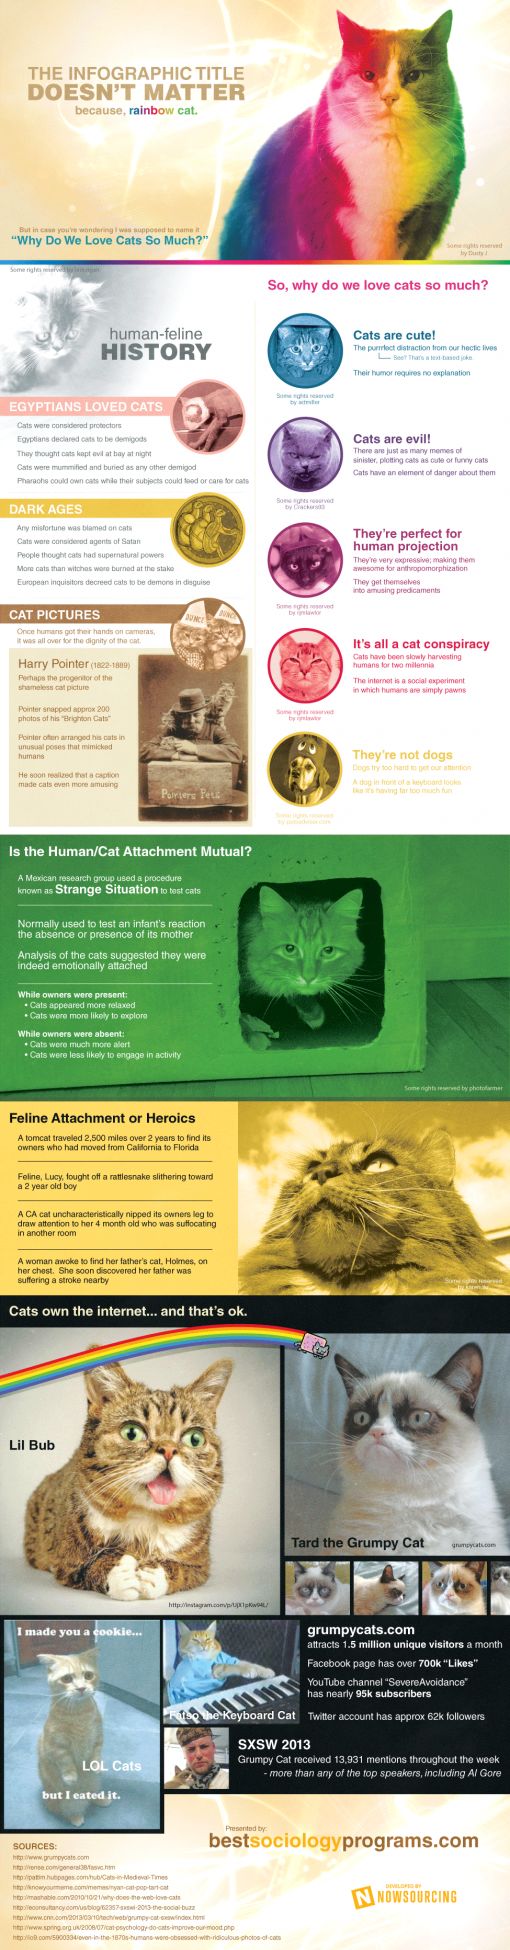 cats-infographic.jpg